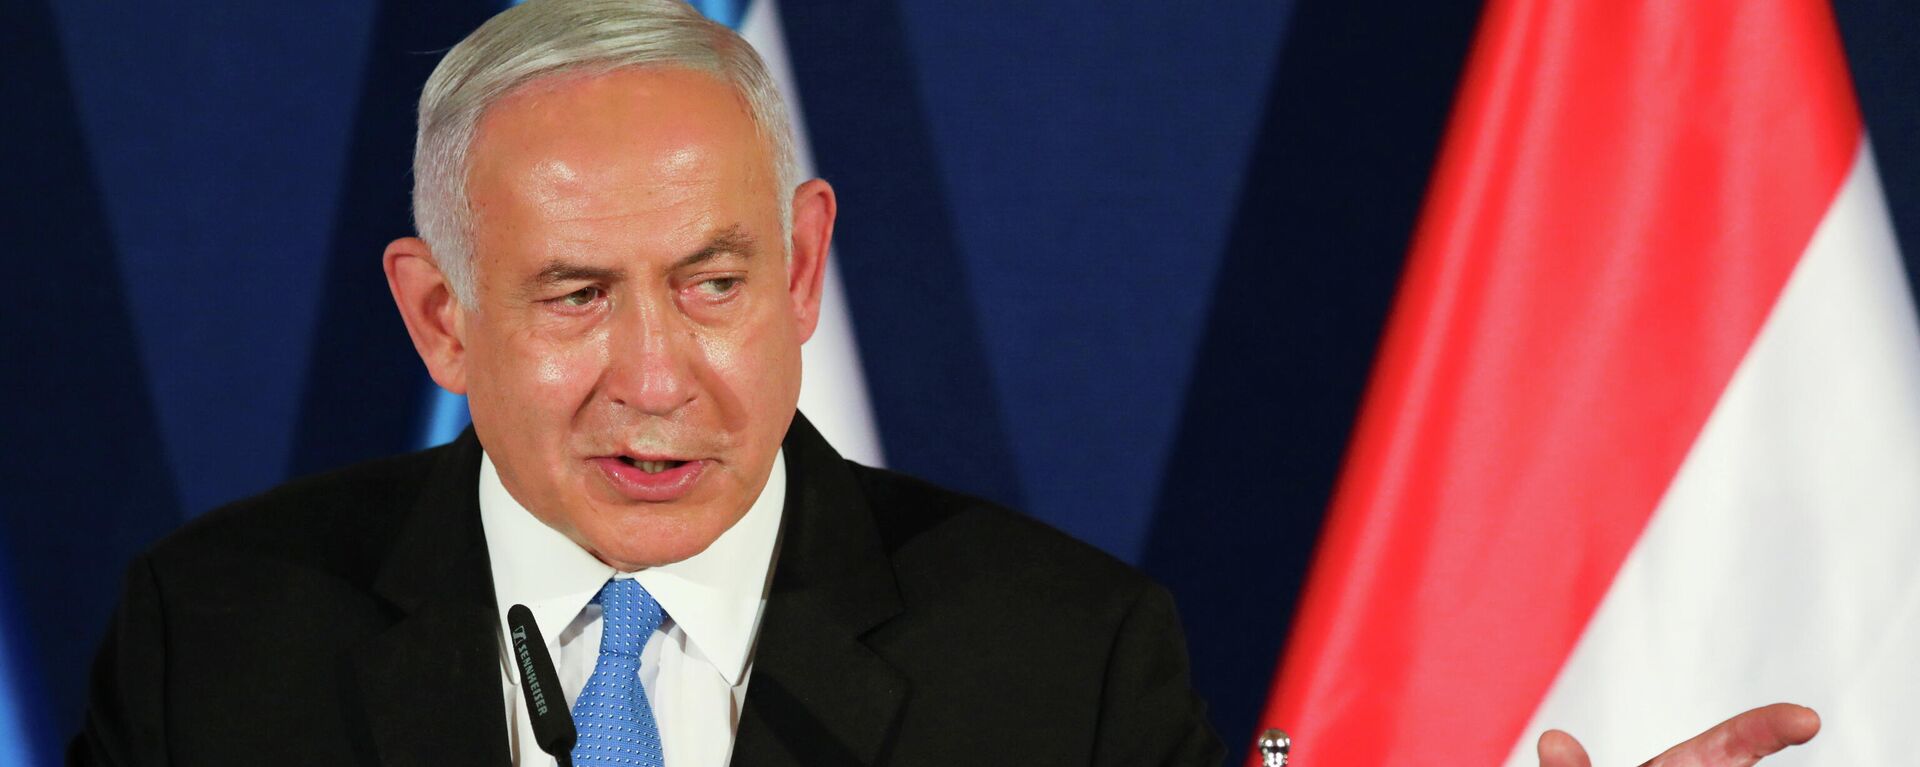 Benjamín Netanyahu, primer ministro israelí - Sputnik Mundo, 1920, 21.03.2021